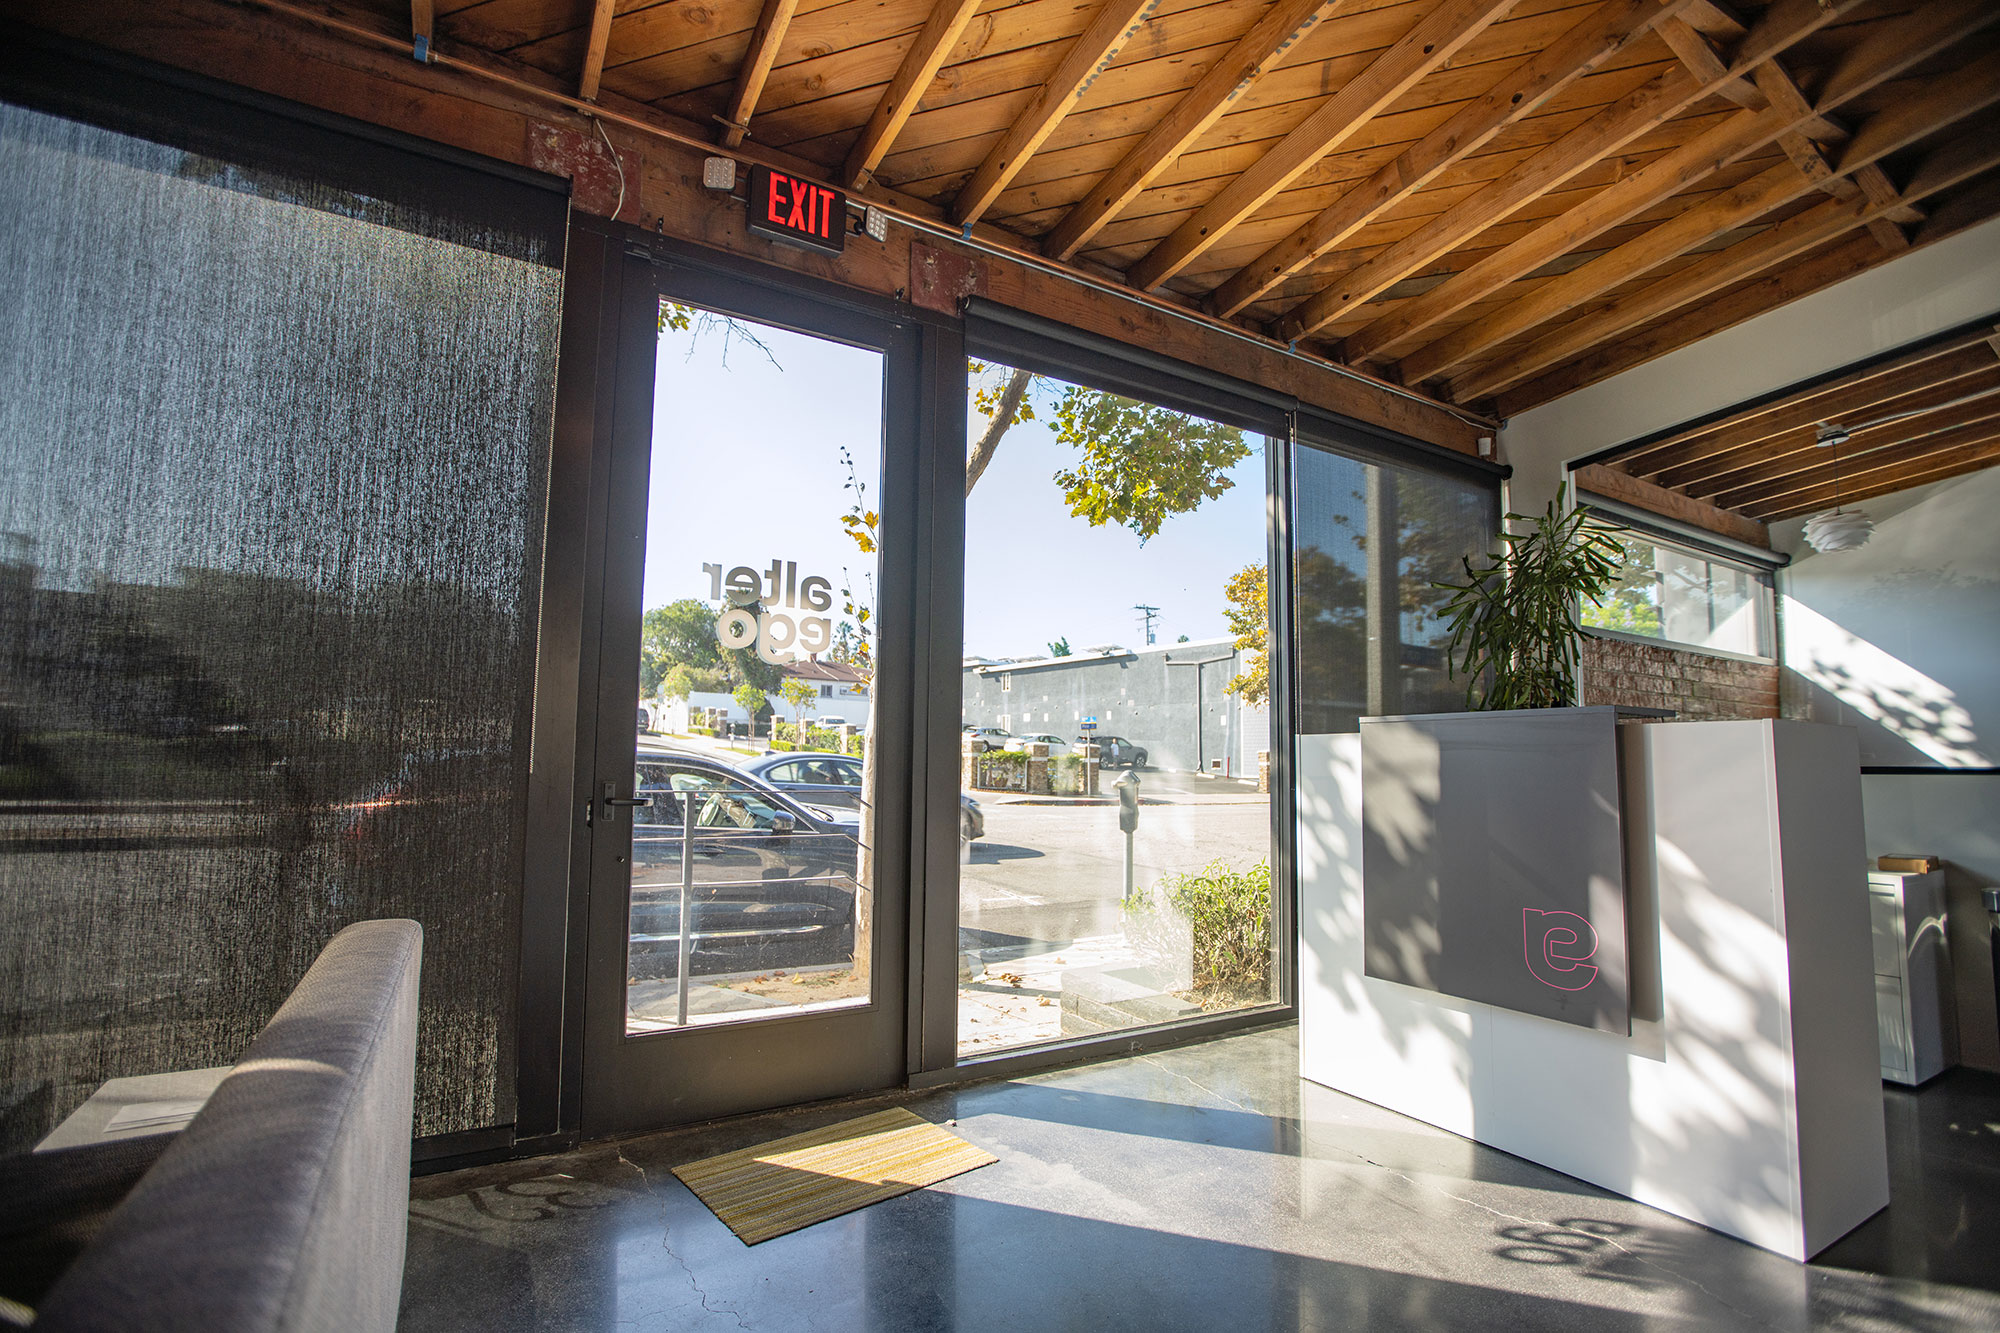 alter ego's new Santa Monica offices